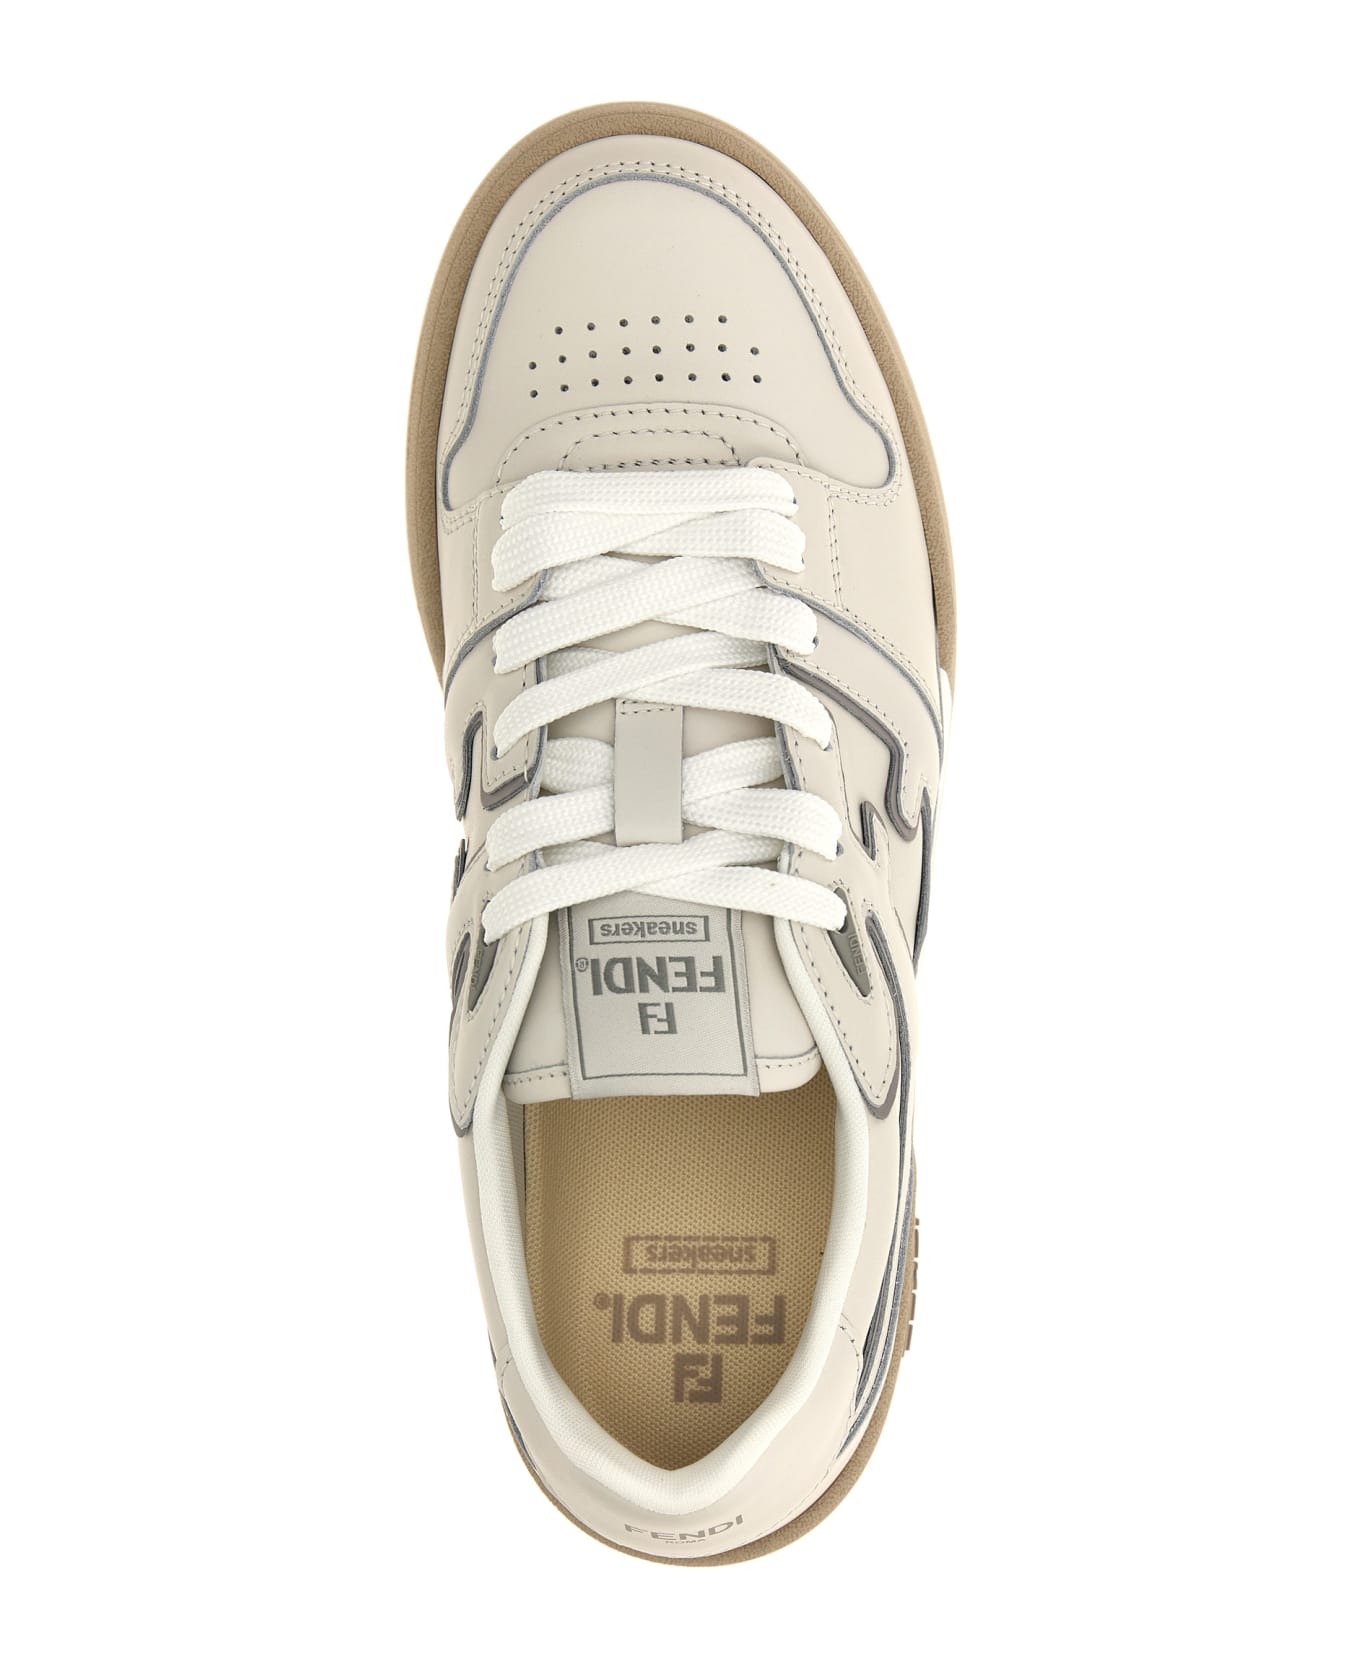 Fendi Match Sneakers - White